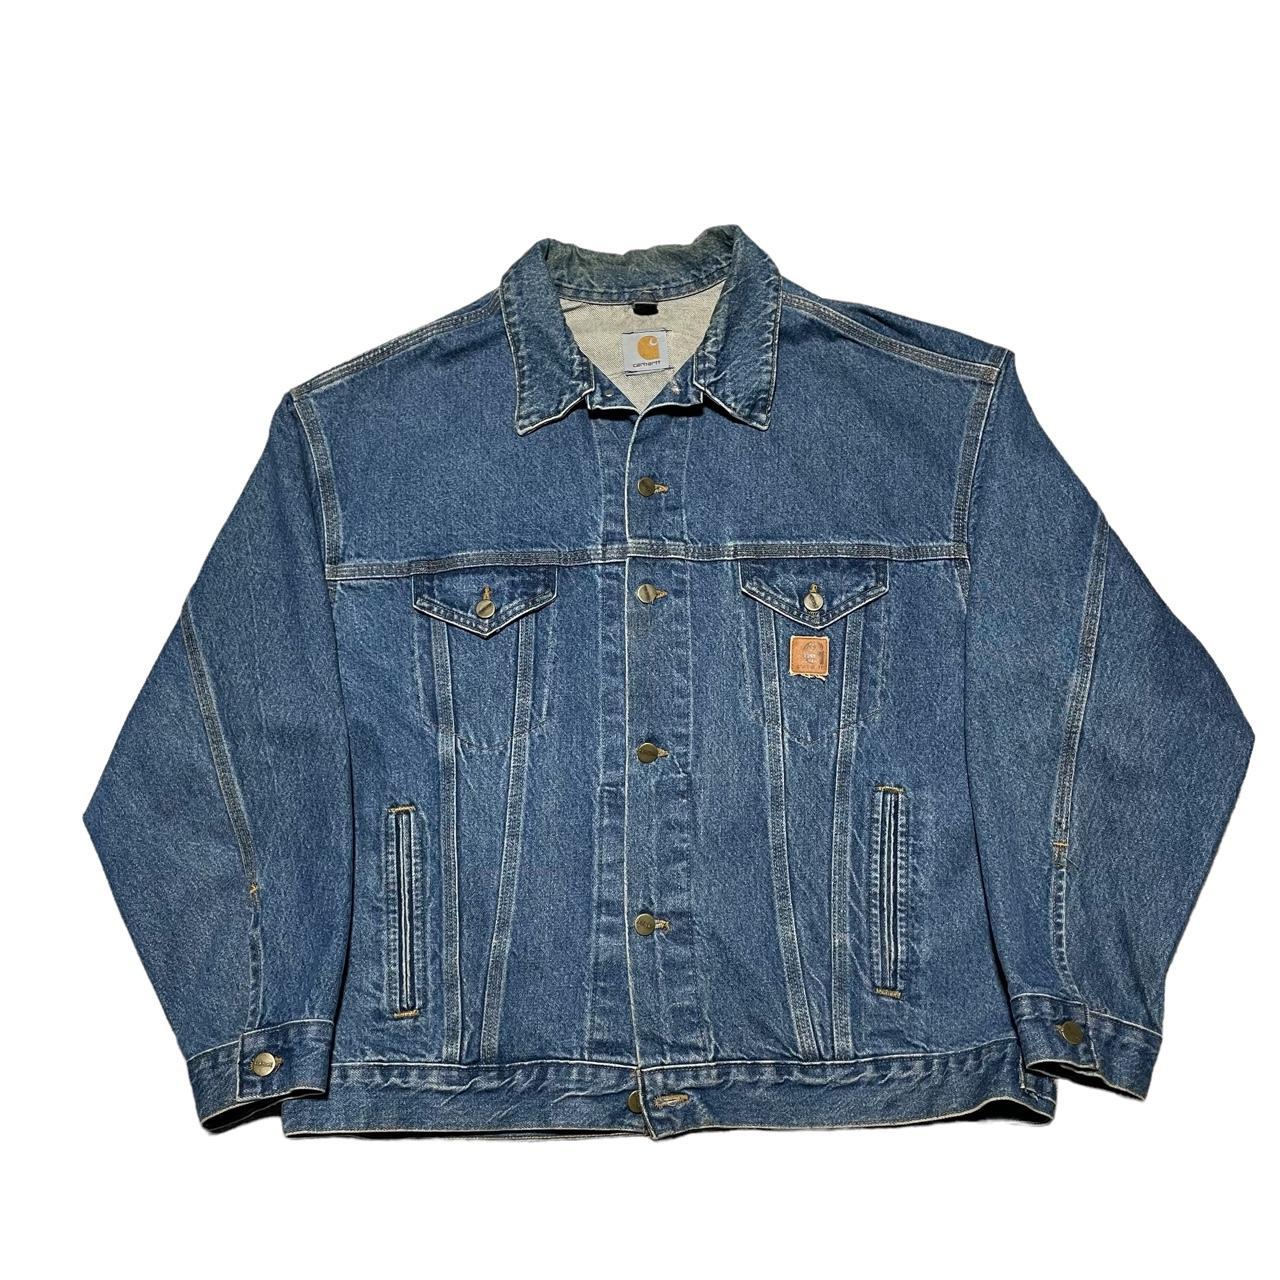 Vintage Carhartt Jean Jacket 💙🔧 •Tag cut fits XL |... - Depop